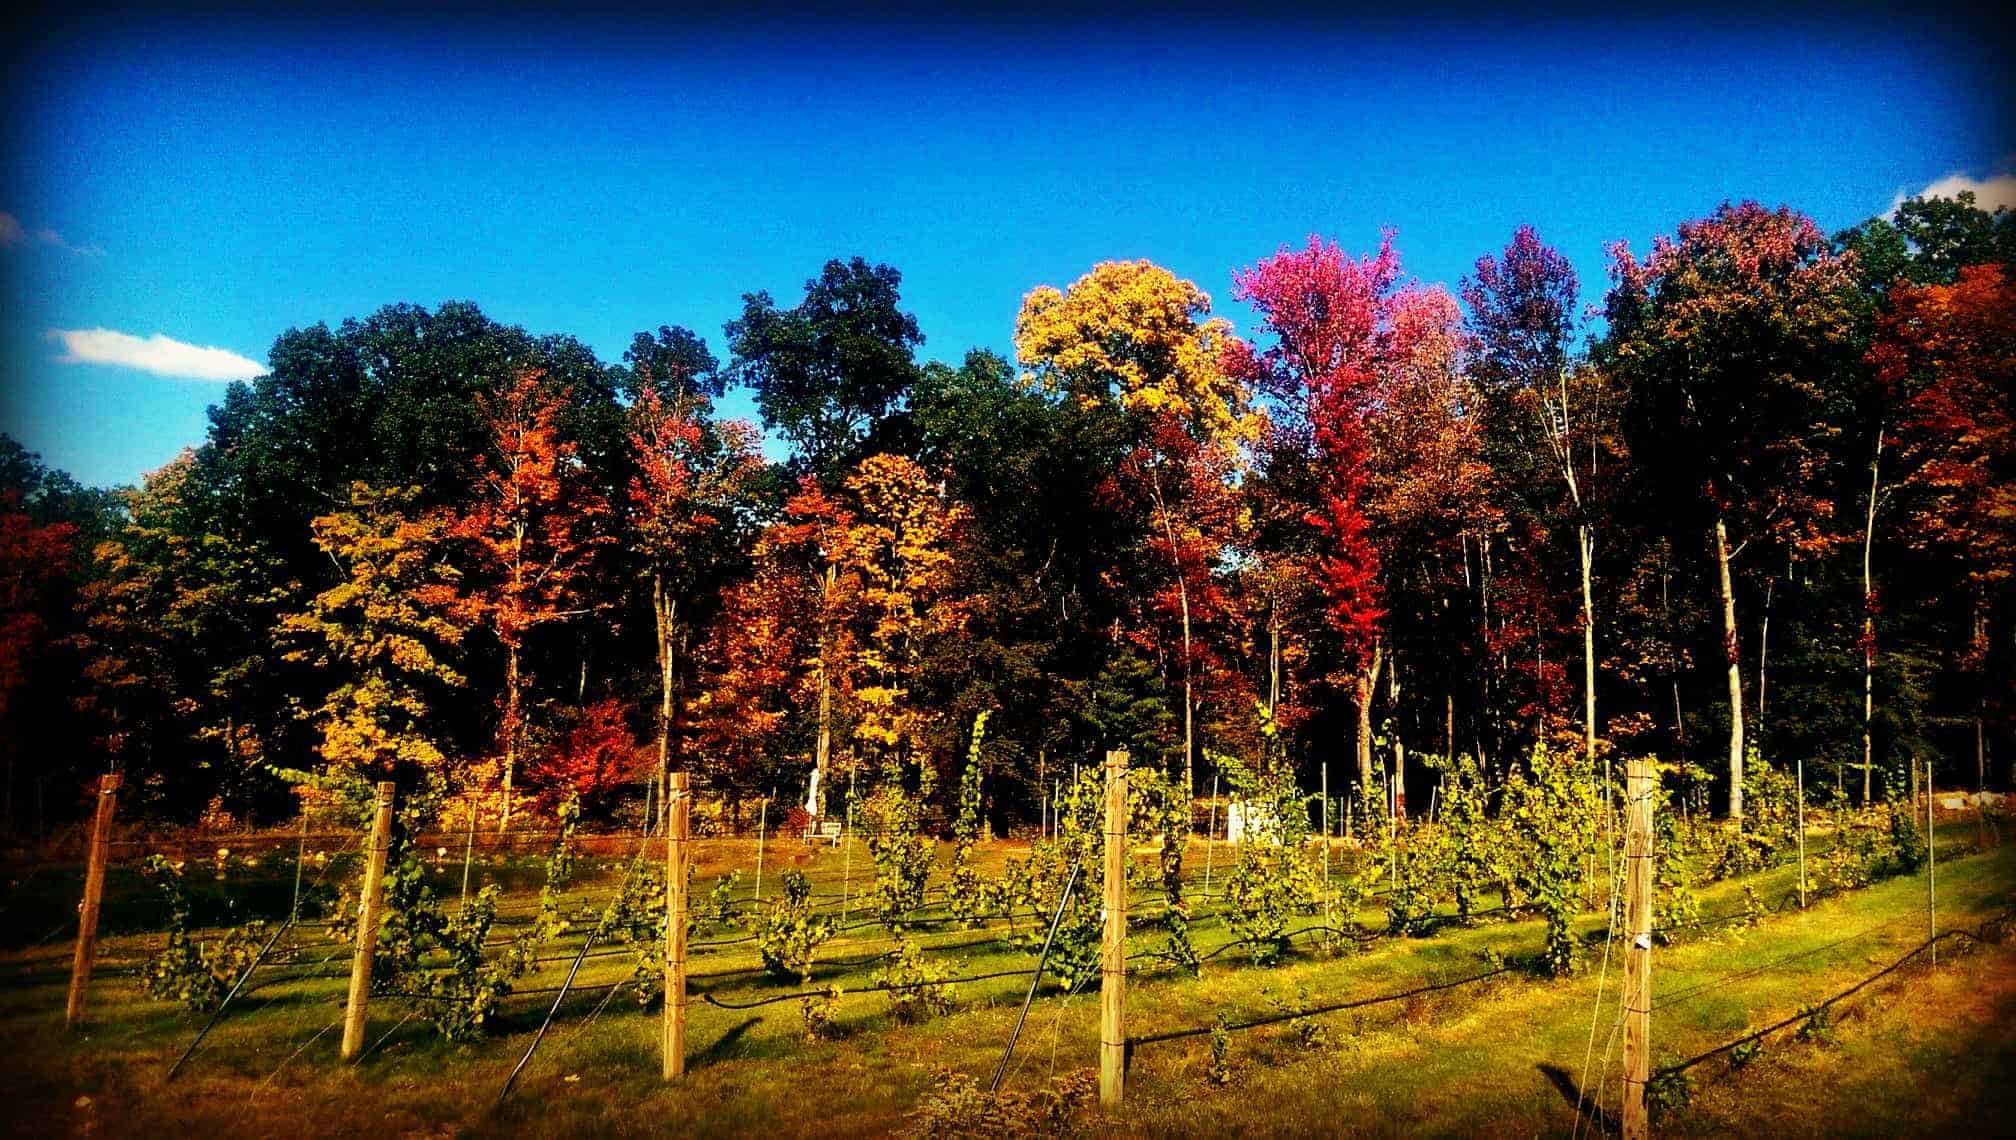 The vineyard in Autumn